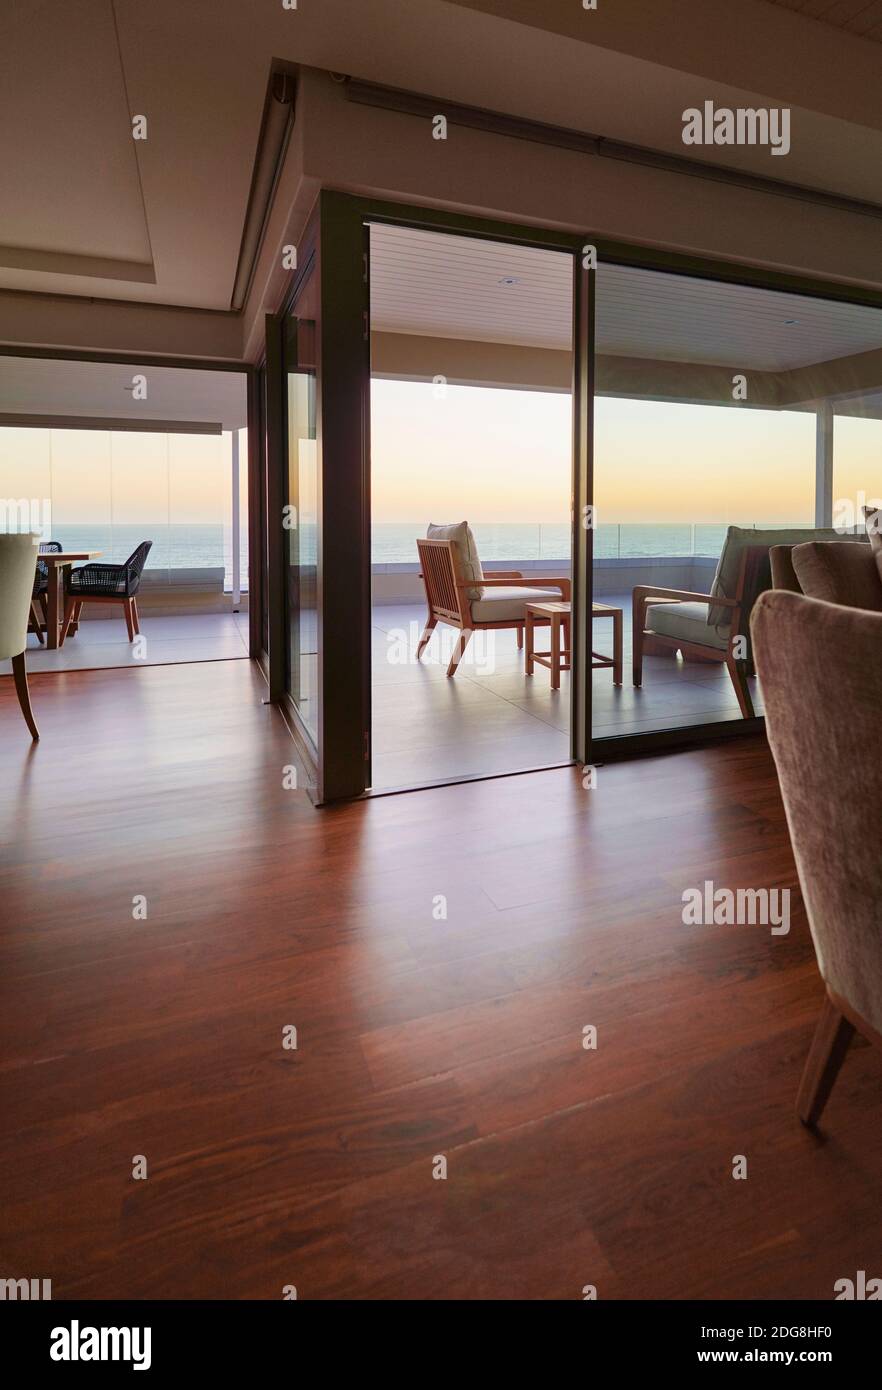 Holzböden im Haus Vitrine Interieur mit Sonnenuntergang Meerblick Stockfoto